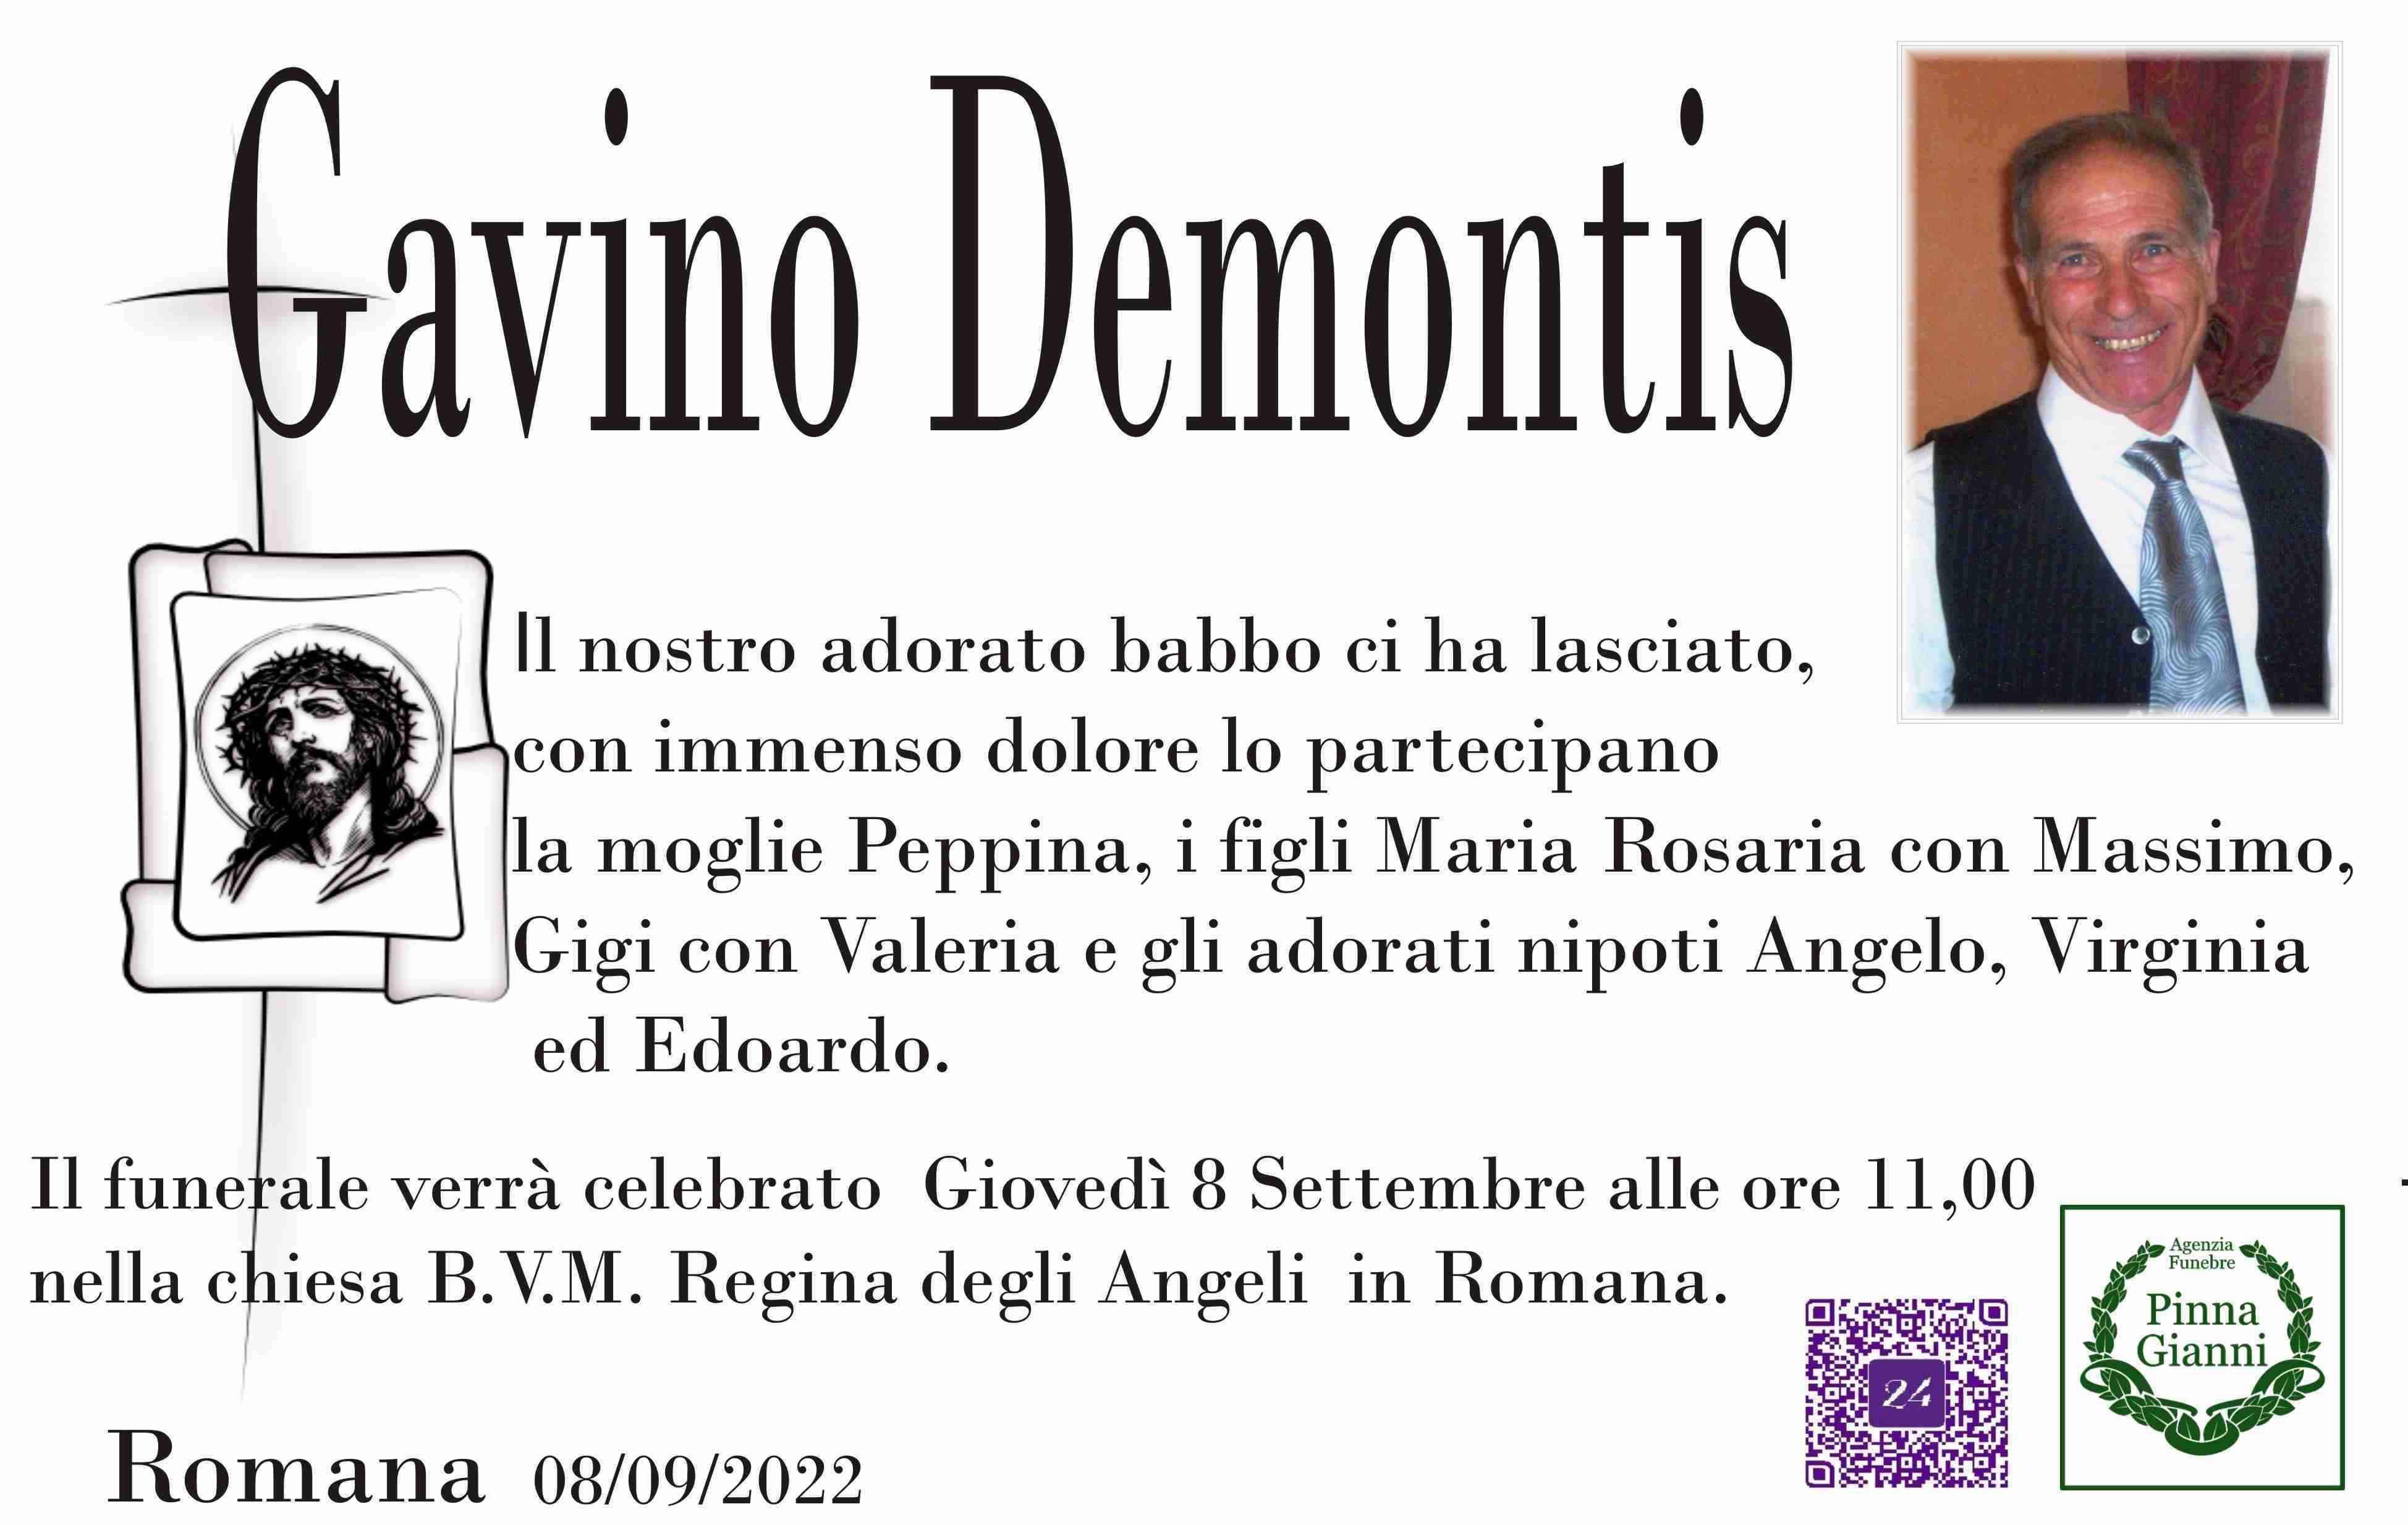 Gavino Demontis